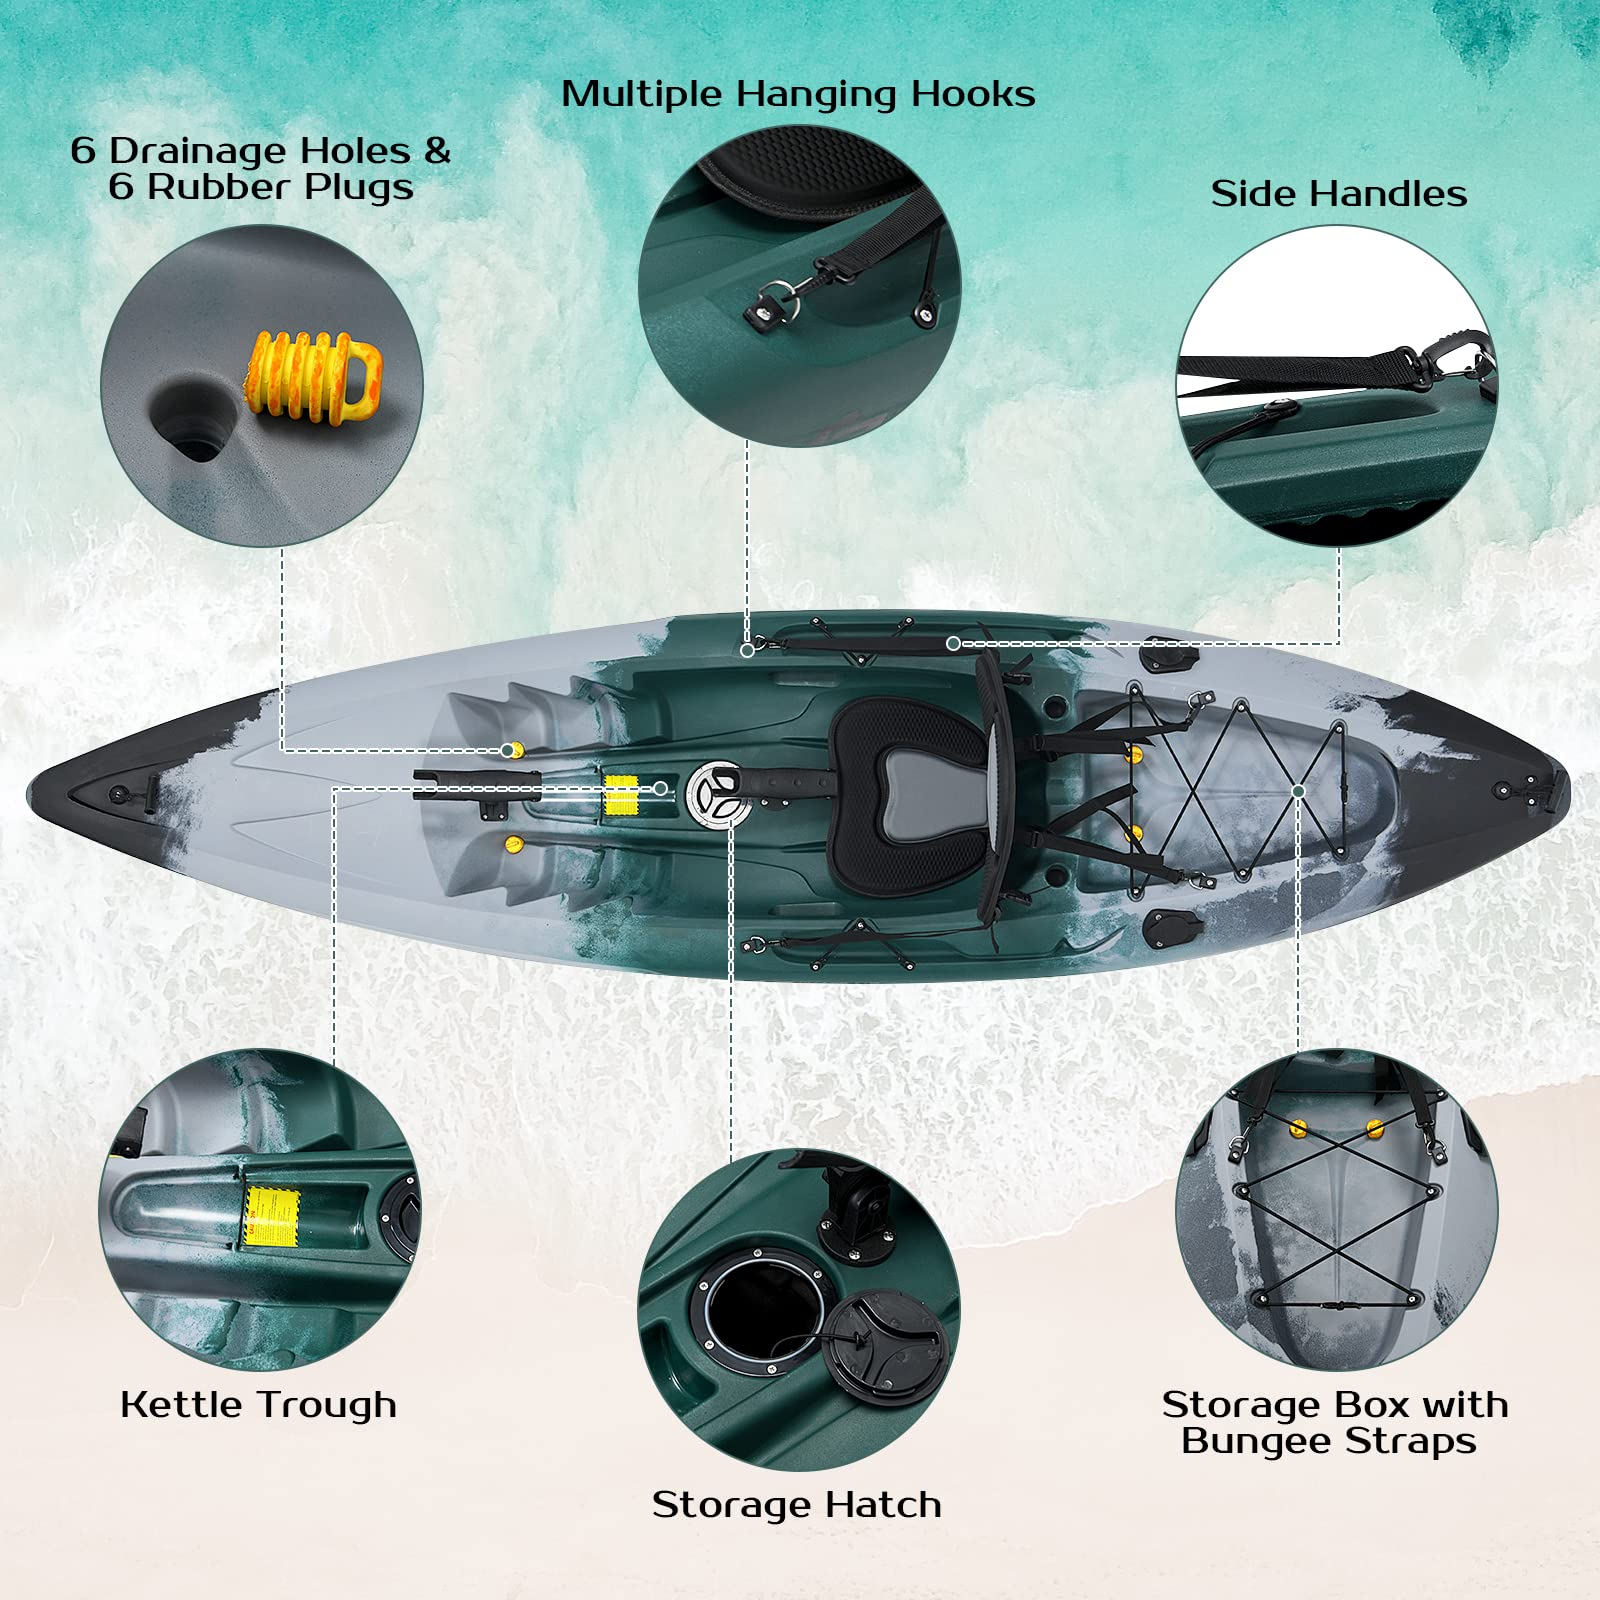 Goplus Sit-on-Top Fishing Kayaks for Adults, 9.7 FT One Person Recreational Touring Kayak